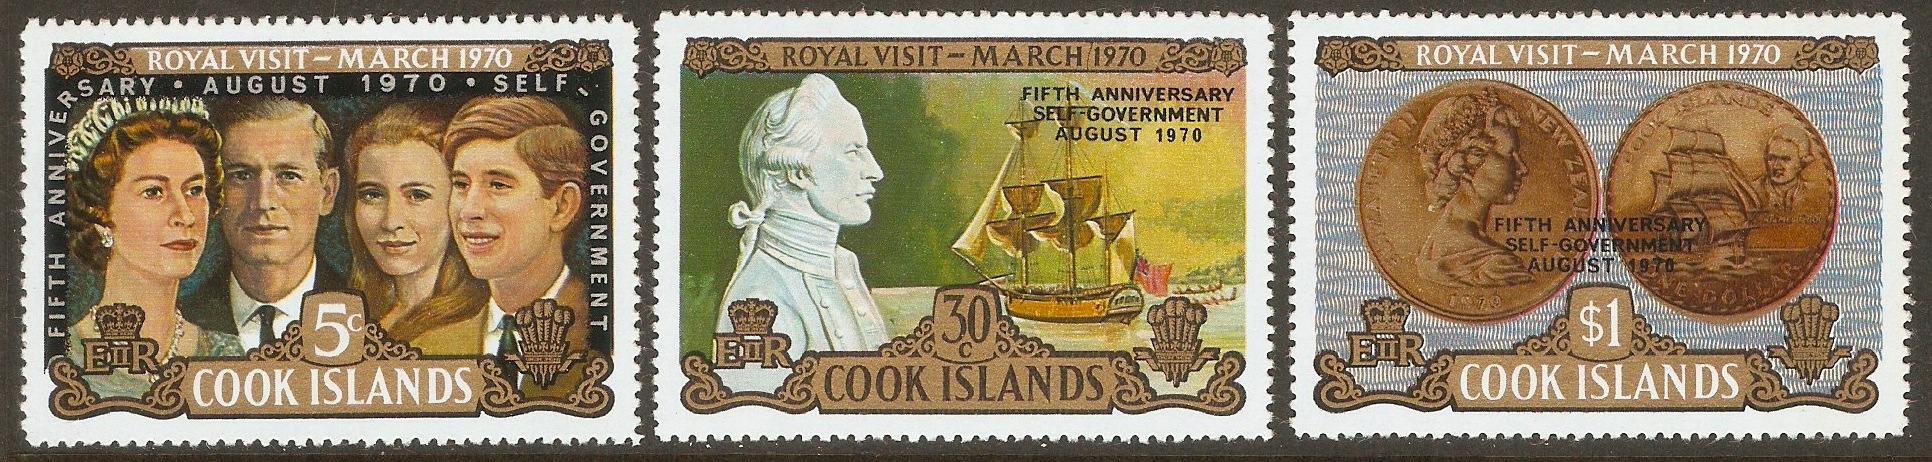 Cook Islands 1970 Self-Government Anniversary set. SG332-SG334. - Click Image to Close